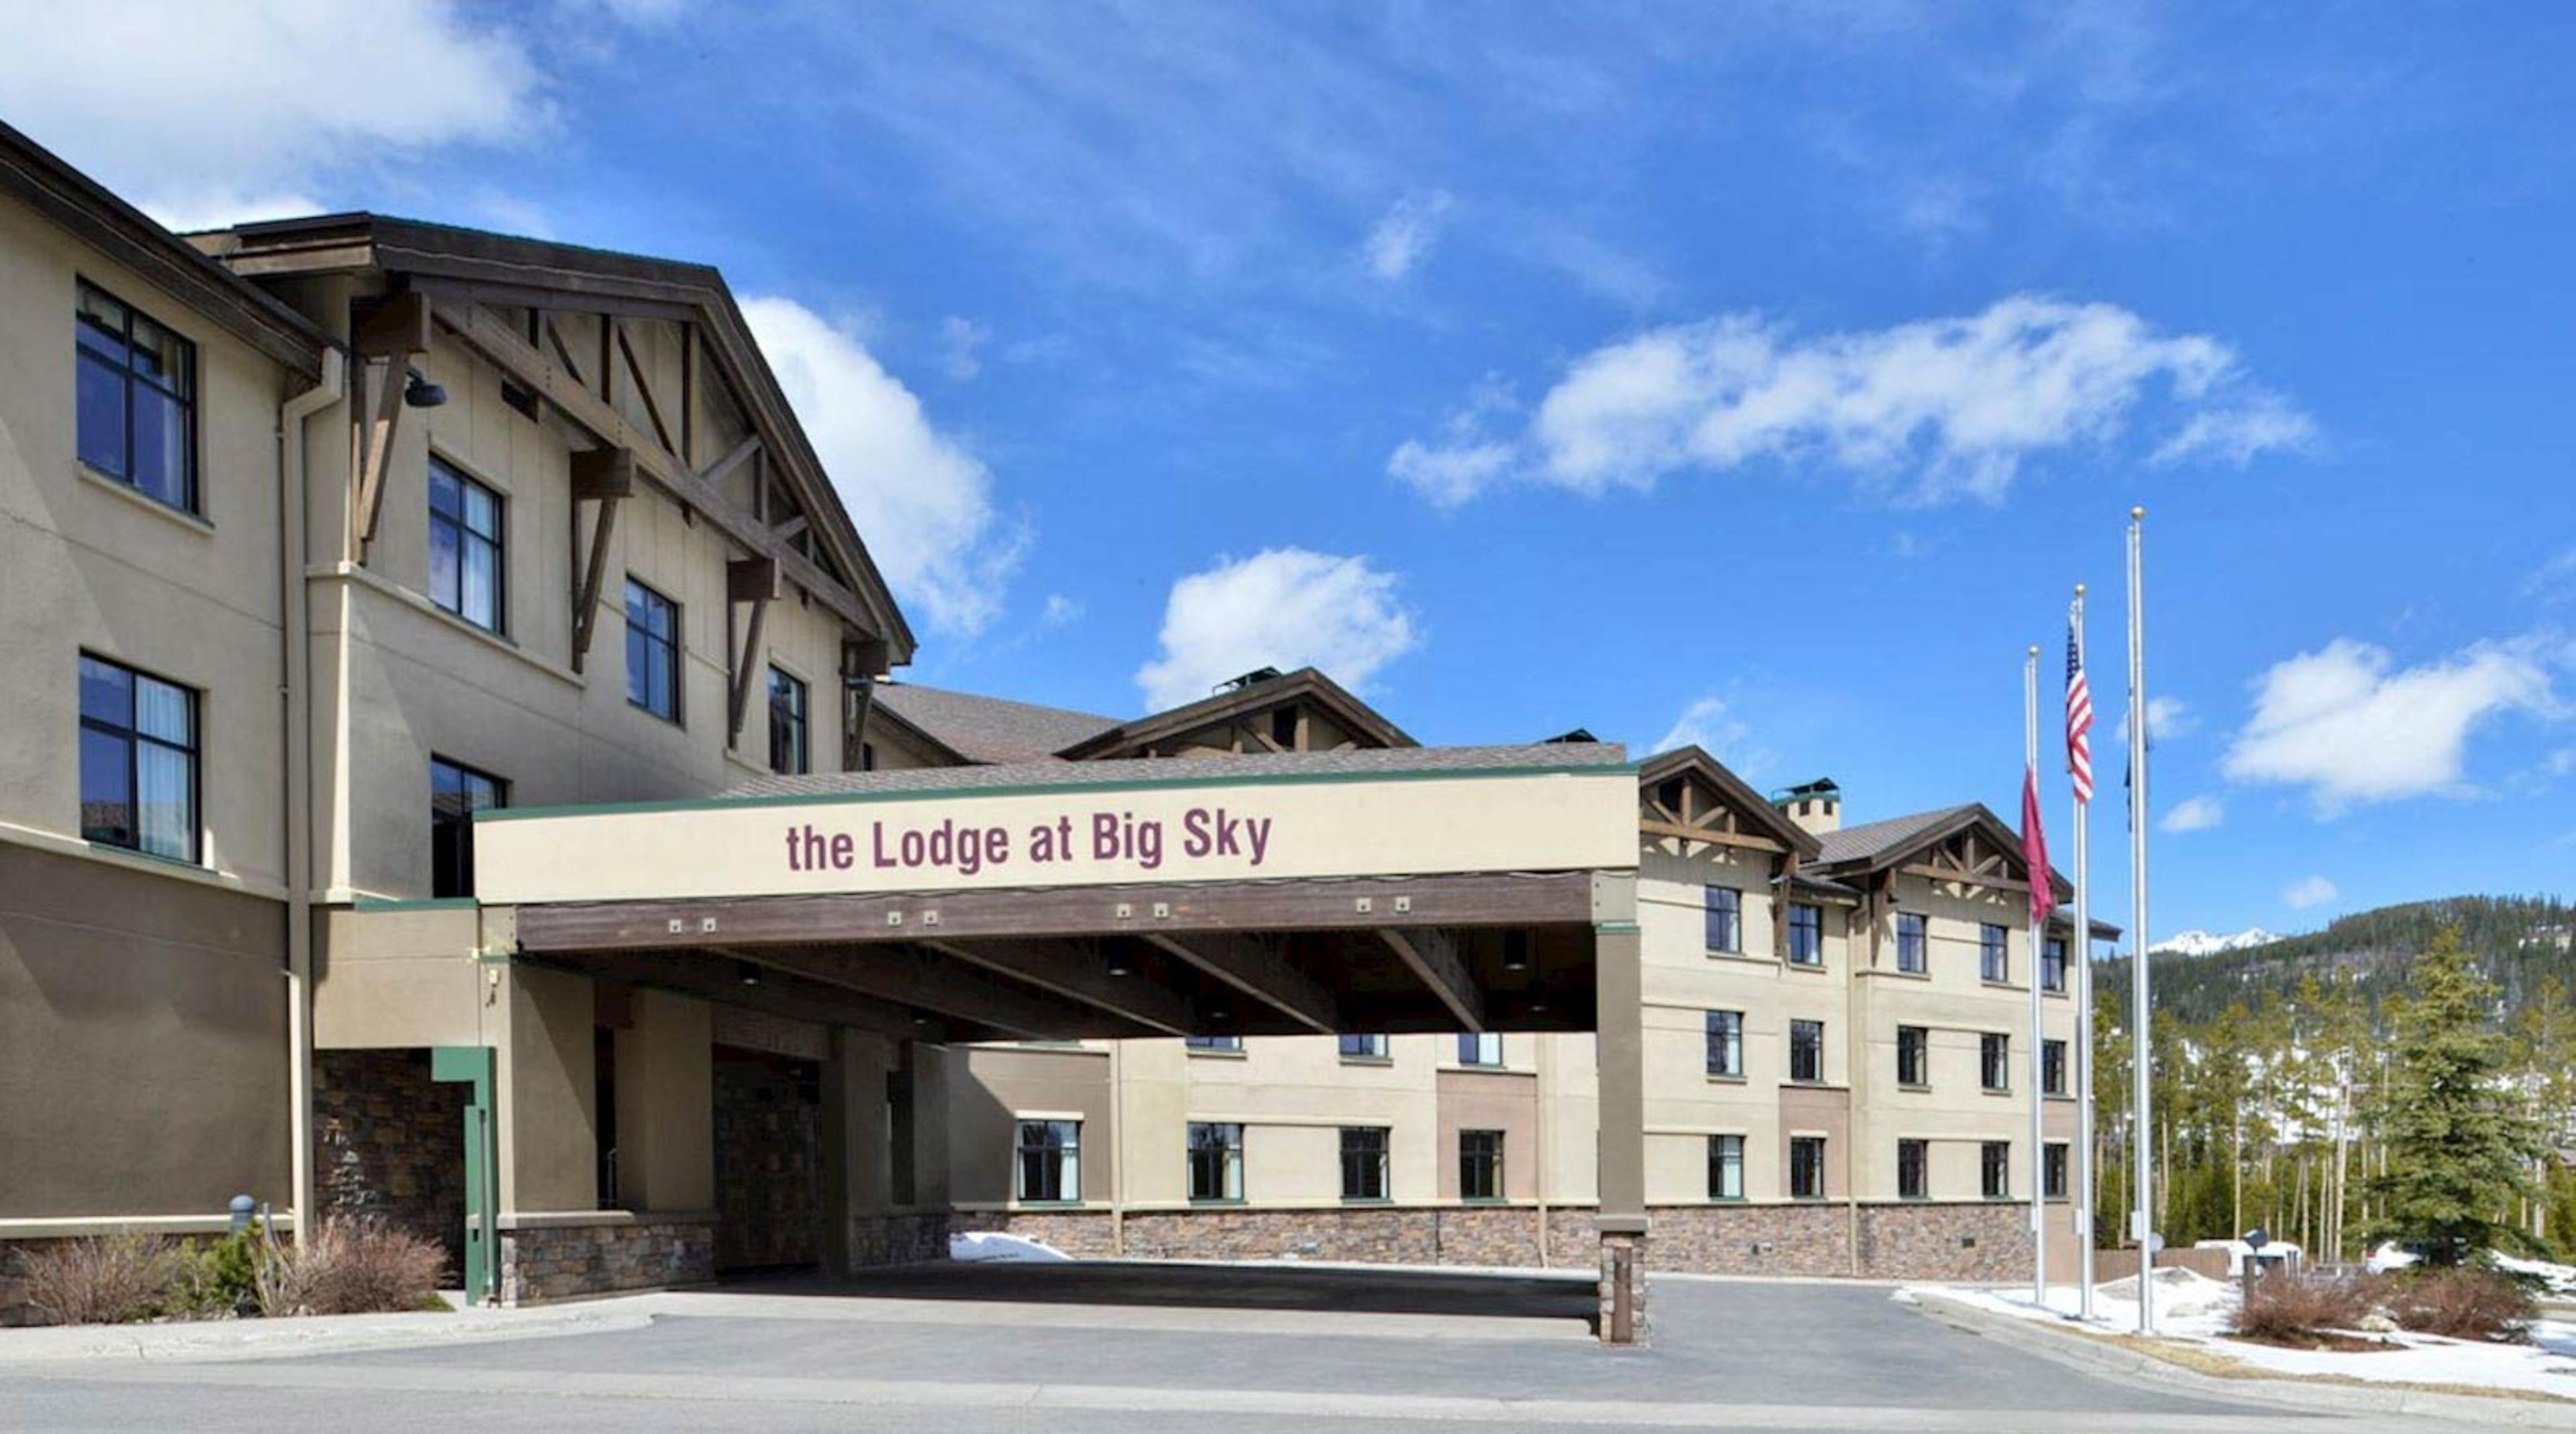 The Lodge at Big Sky